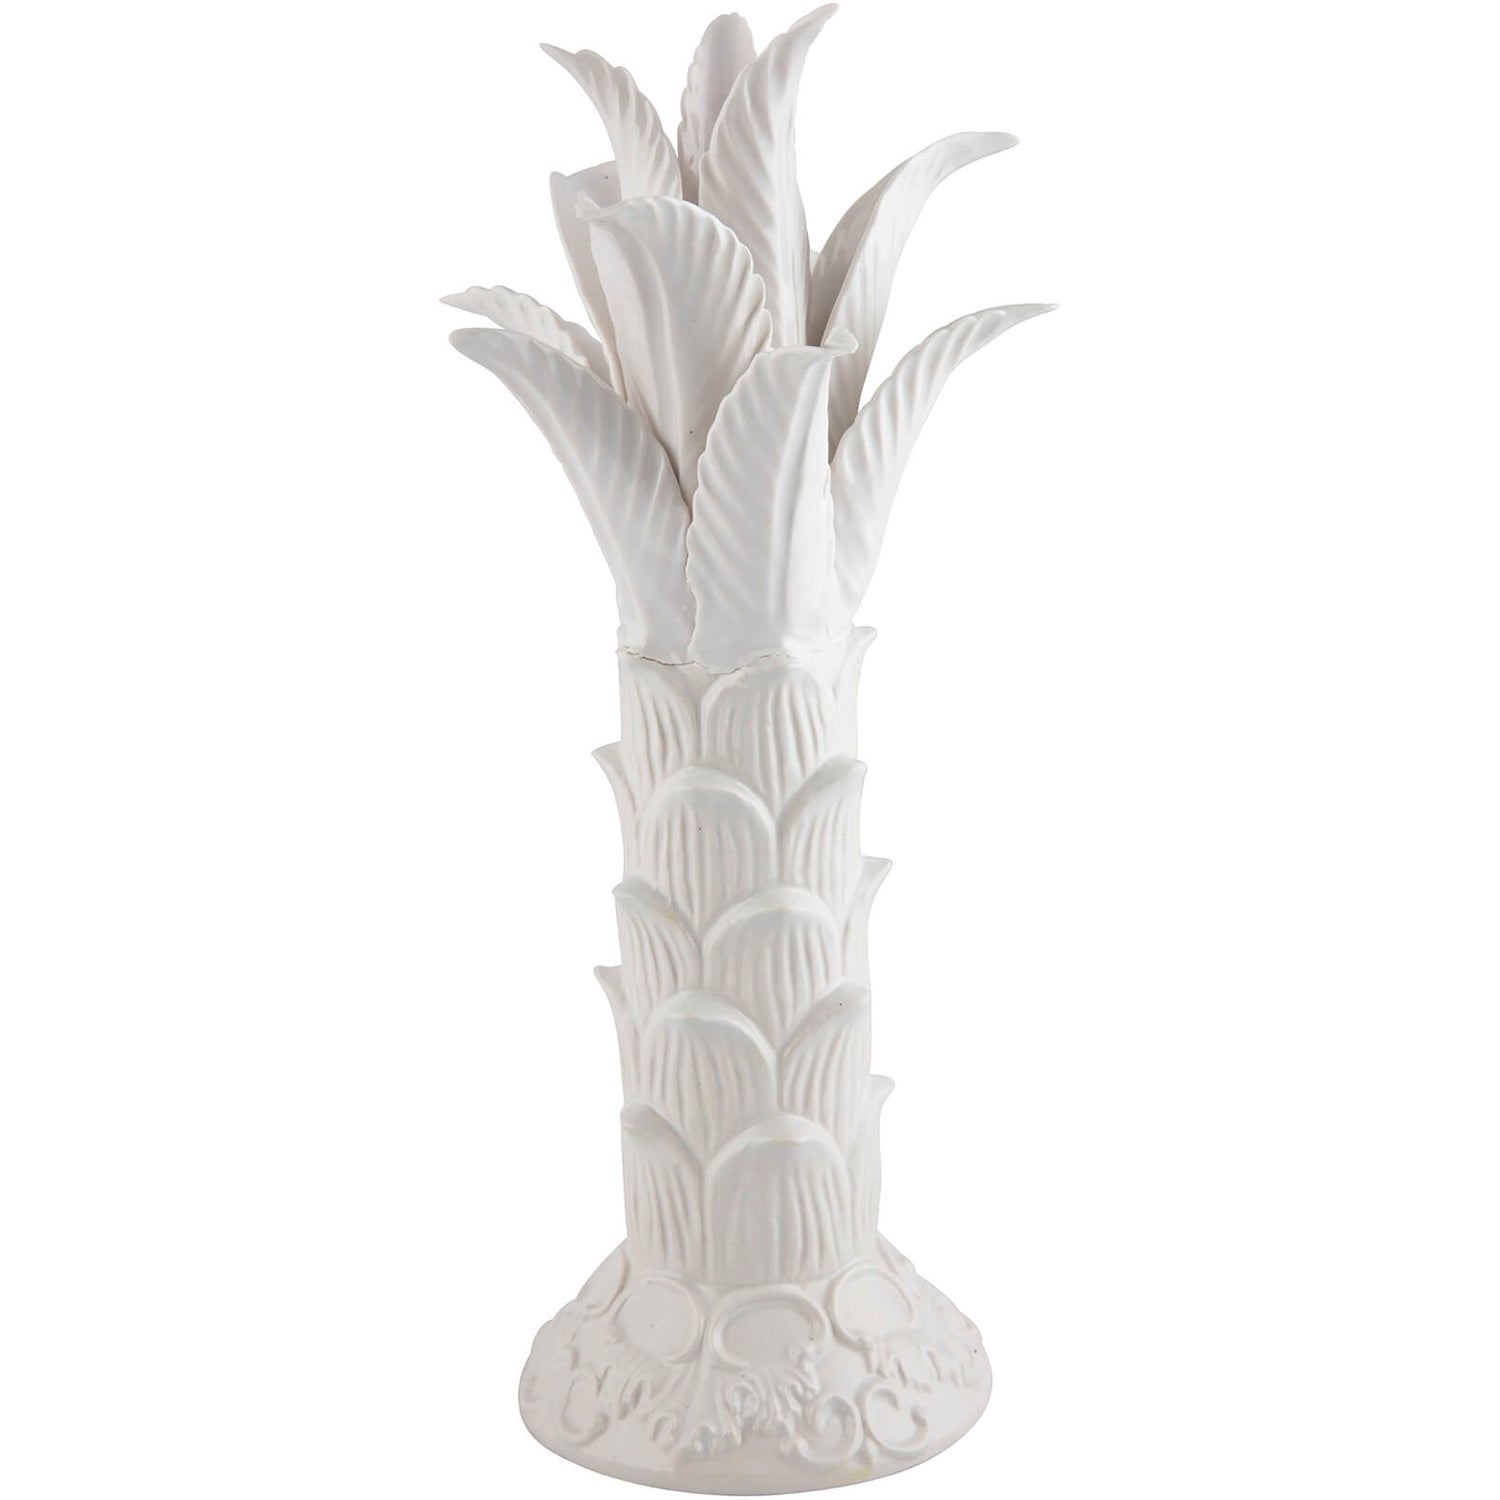 Day Birger et Mikkelsen Home Palm Tree Sculpture - White